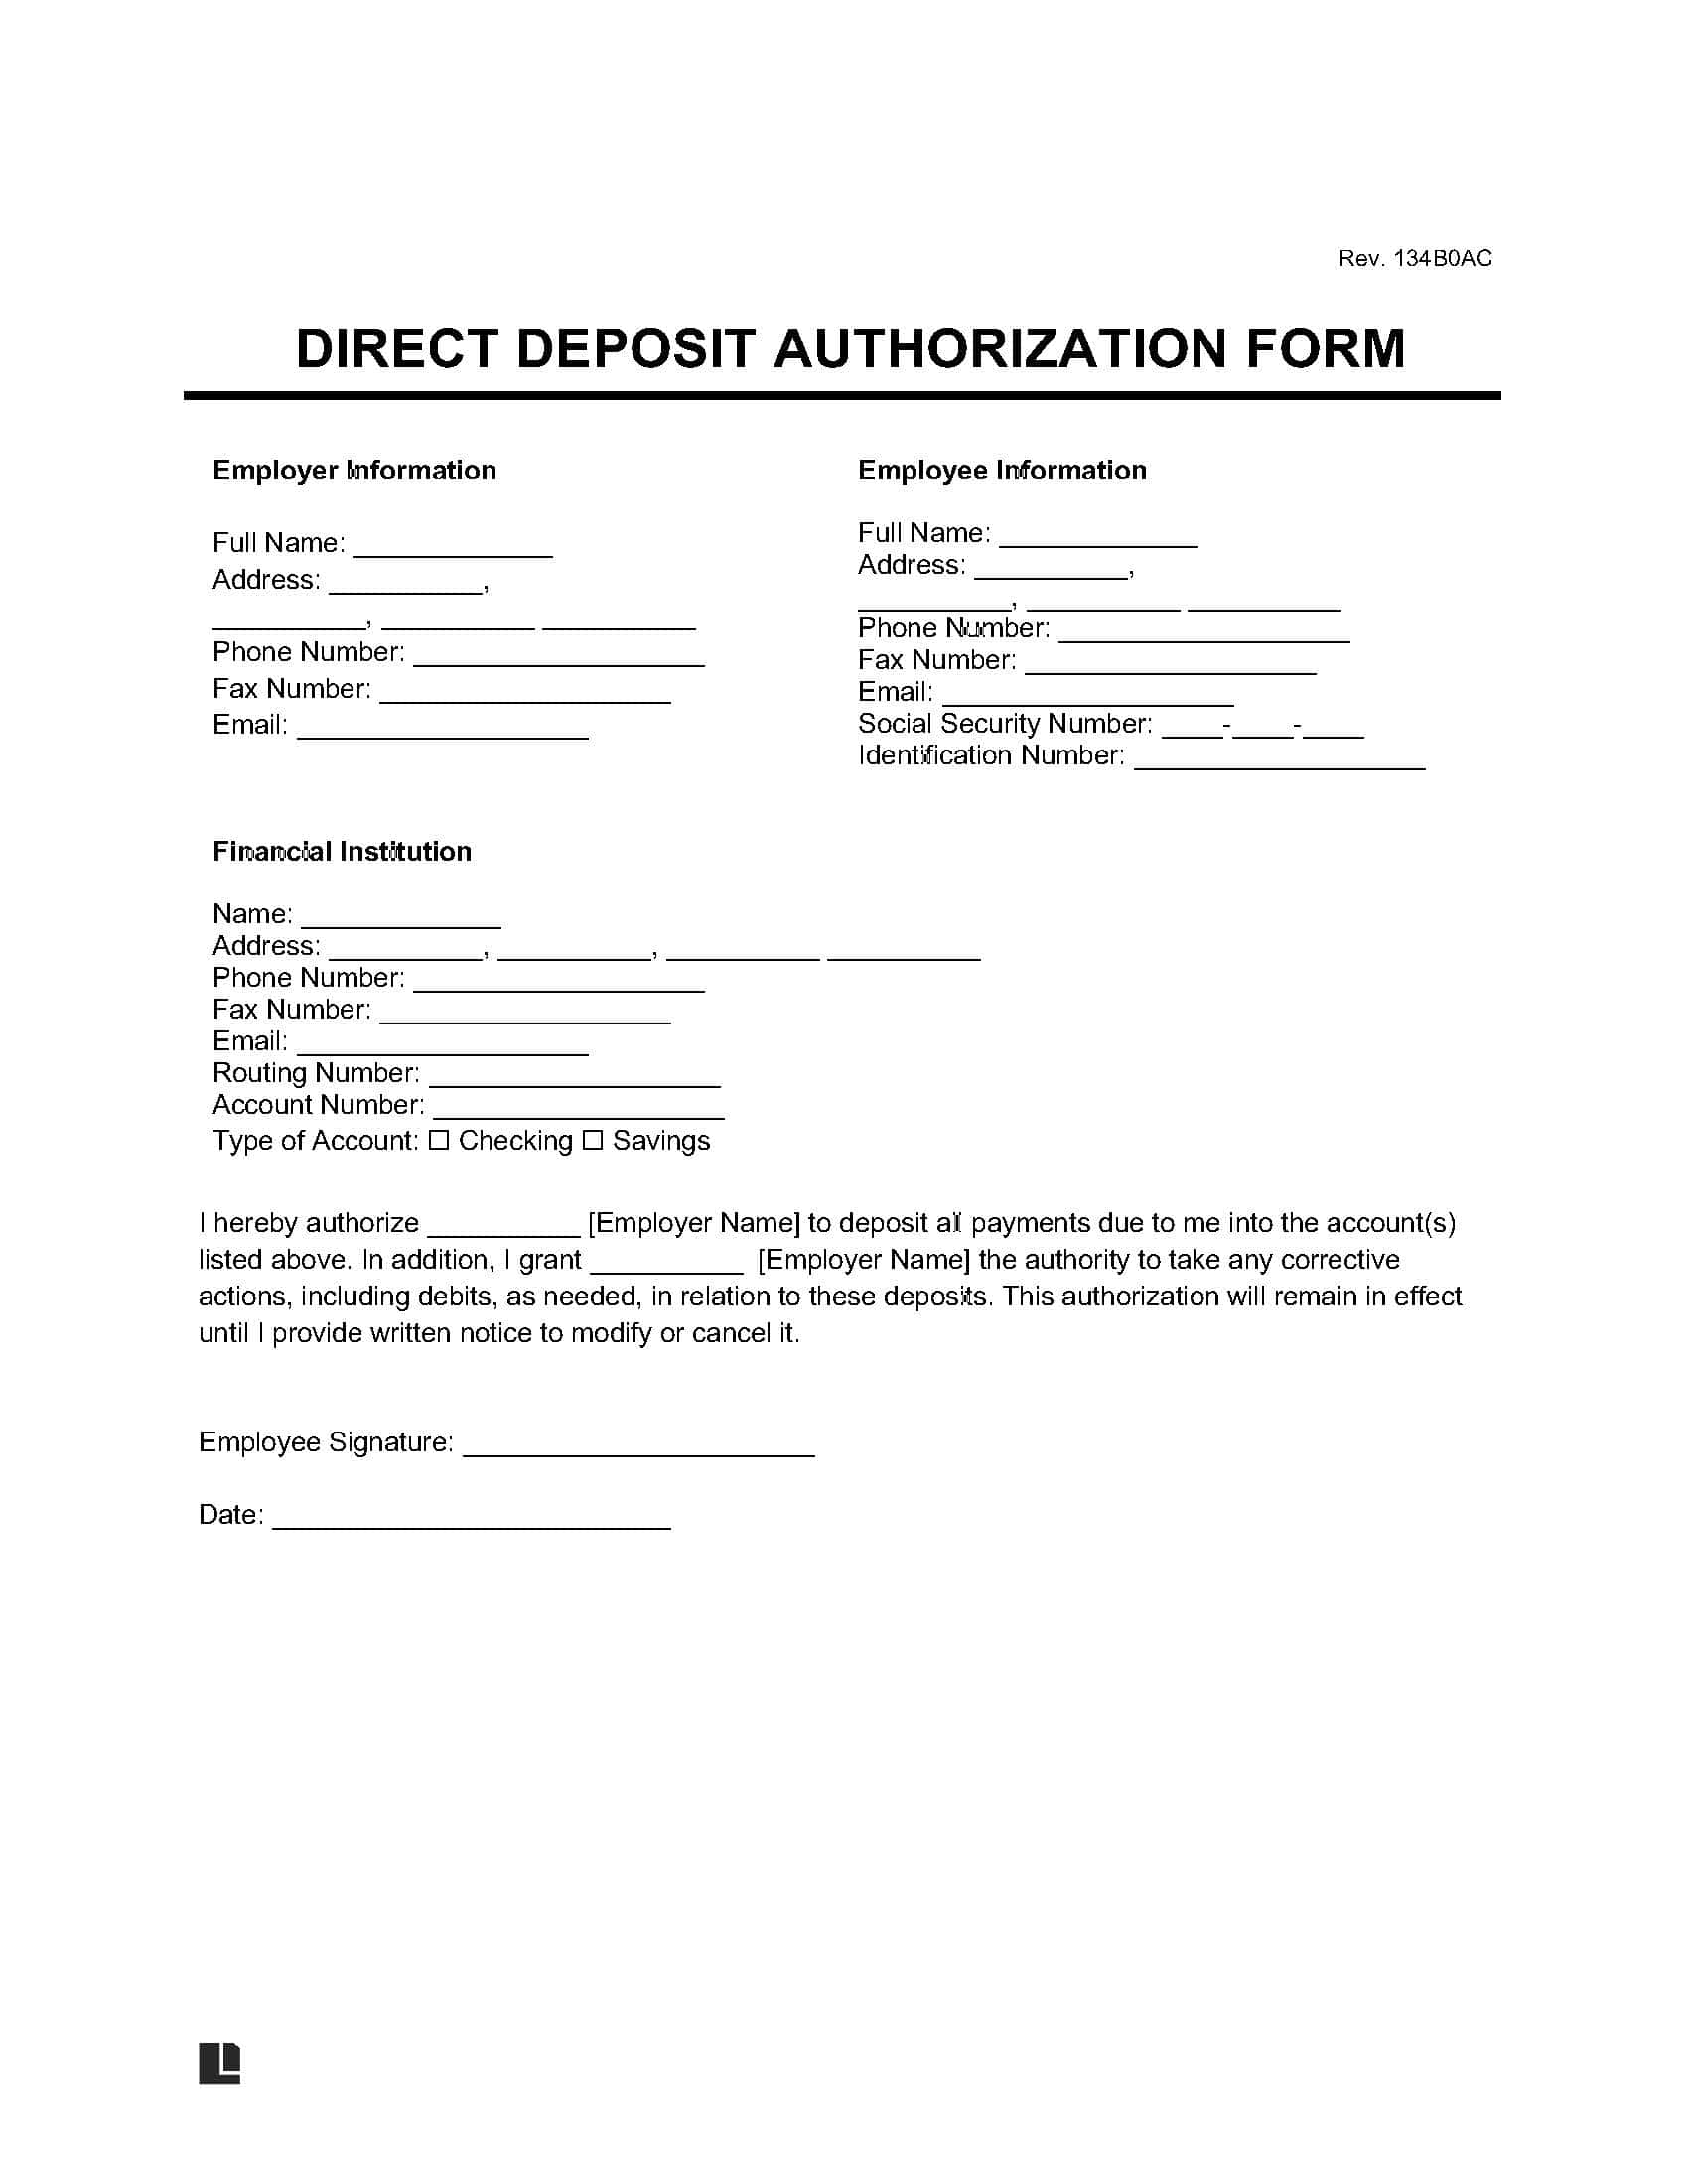 Direct Deposit Authorization screenshot